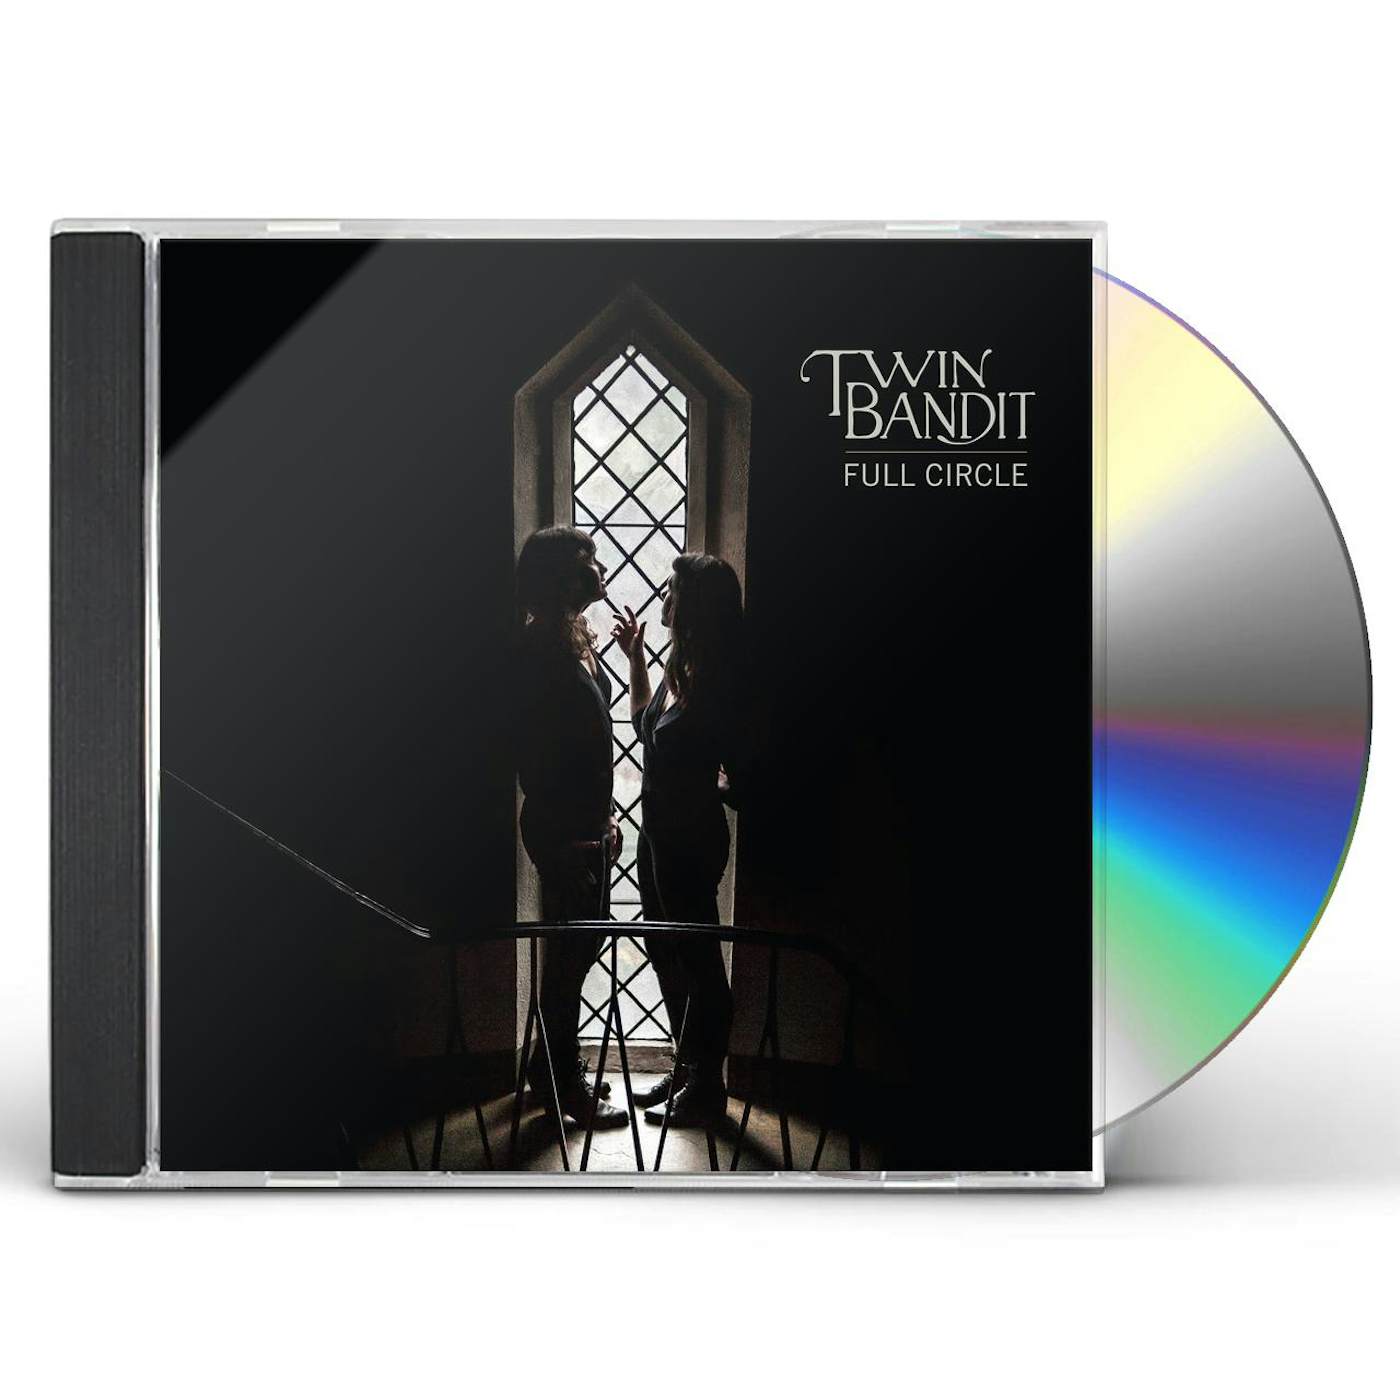 Twin Bandit FULL CIRCLE CD